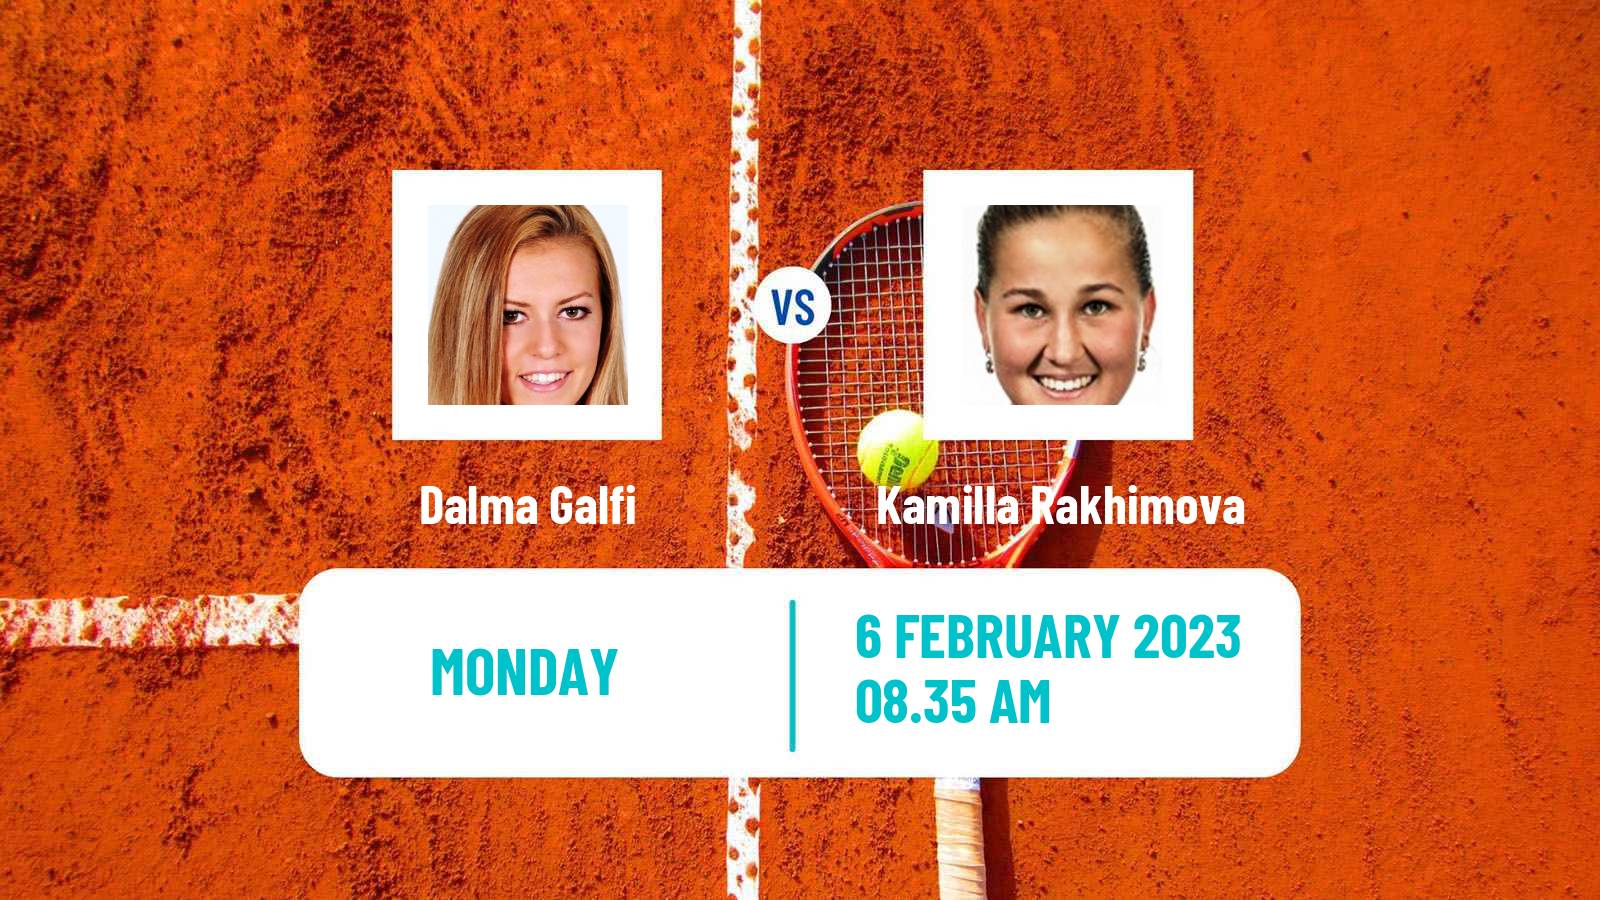 Tennis WTA Linz Dalma Galfi - Kamilla Rakhimova